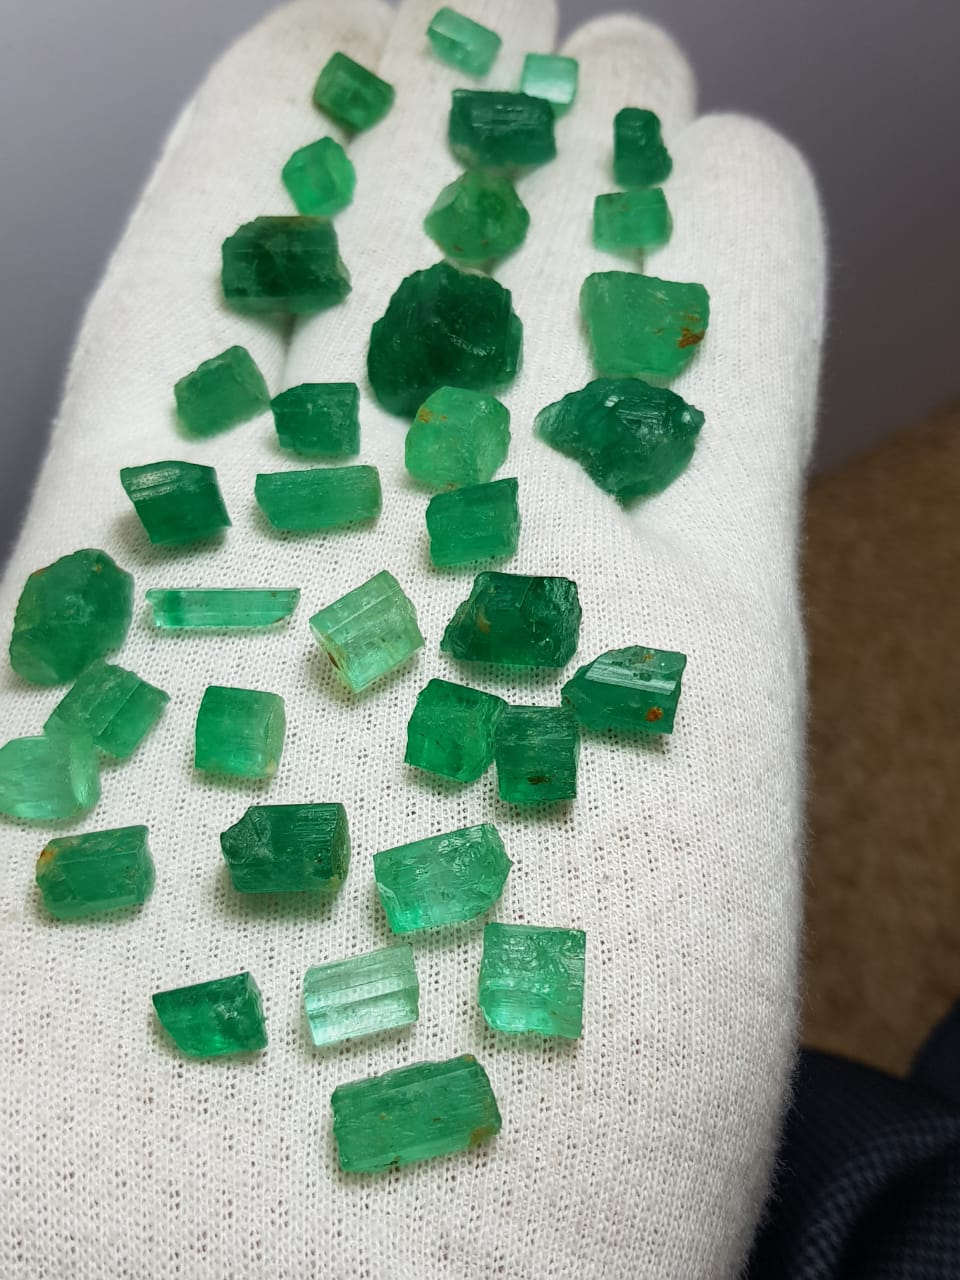 Facet Grade Rough Emeralds Lot available for sale